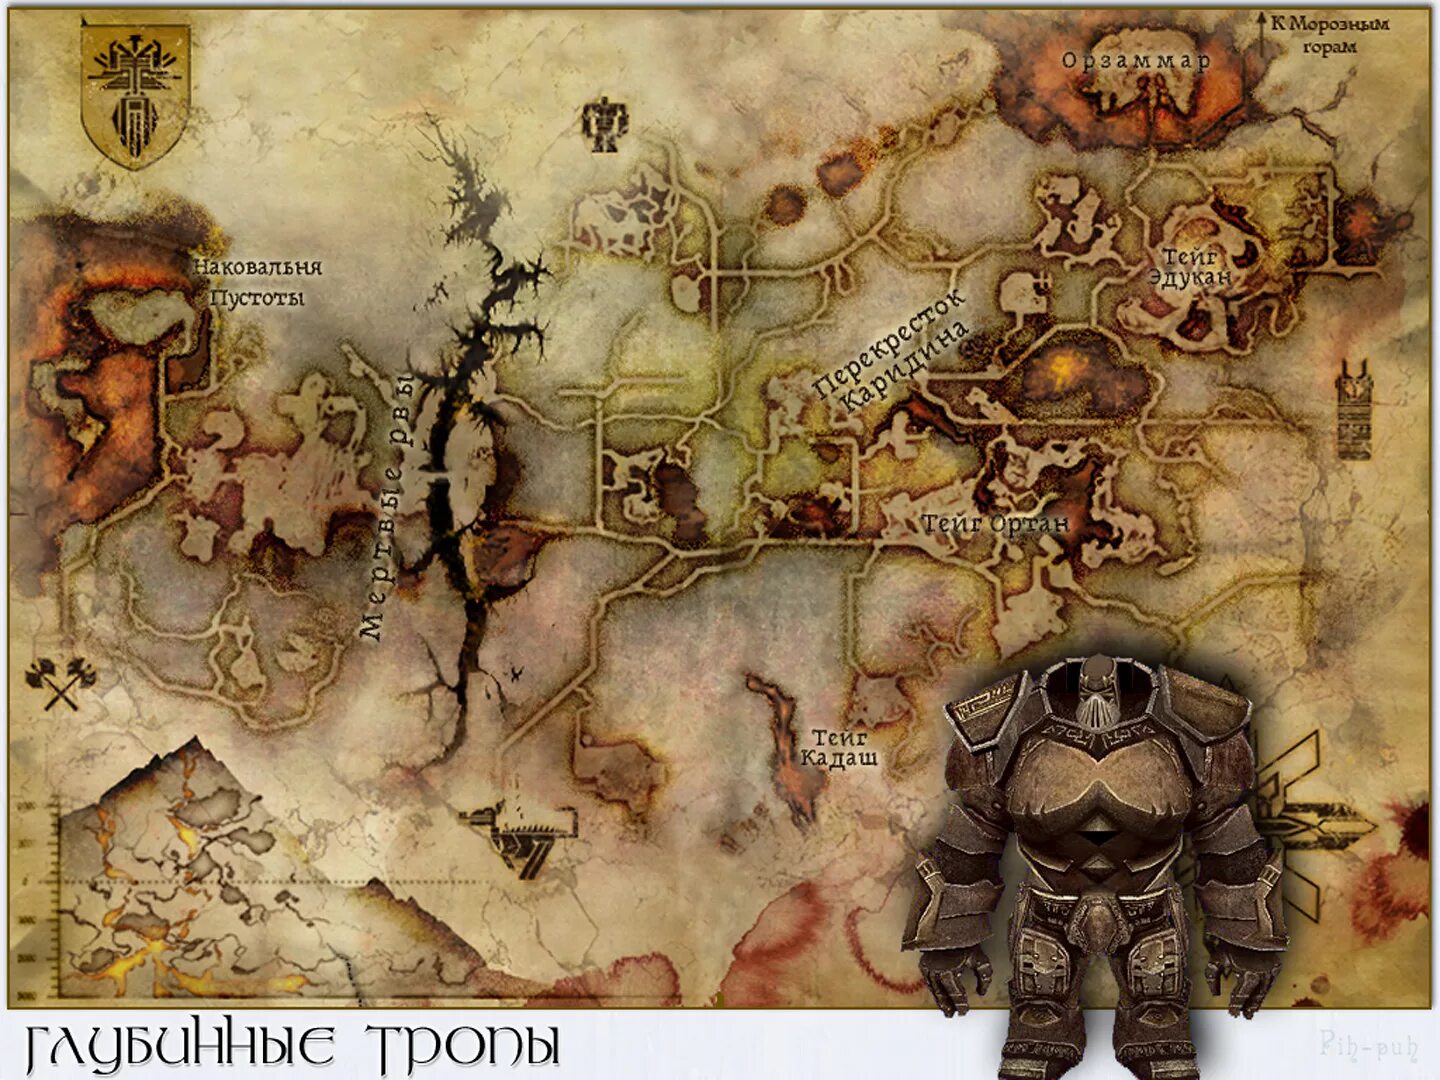 Dragon age Origins карта глубинных троп. Драгон эйдж глубинные тропы. Карта глубинных троп в Dragon age. Глубинные тропы dao.